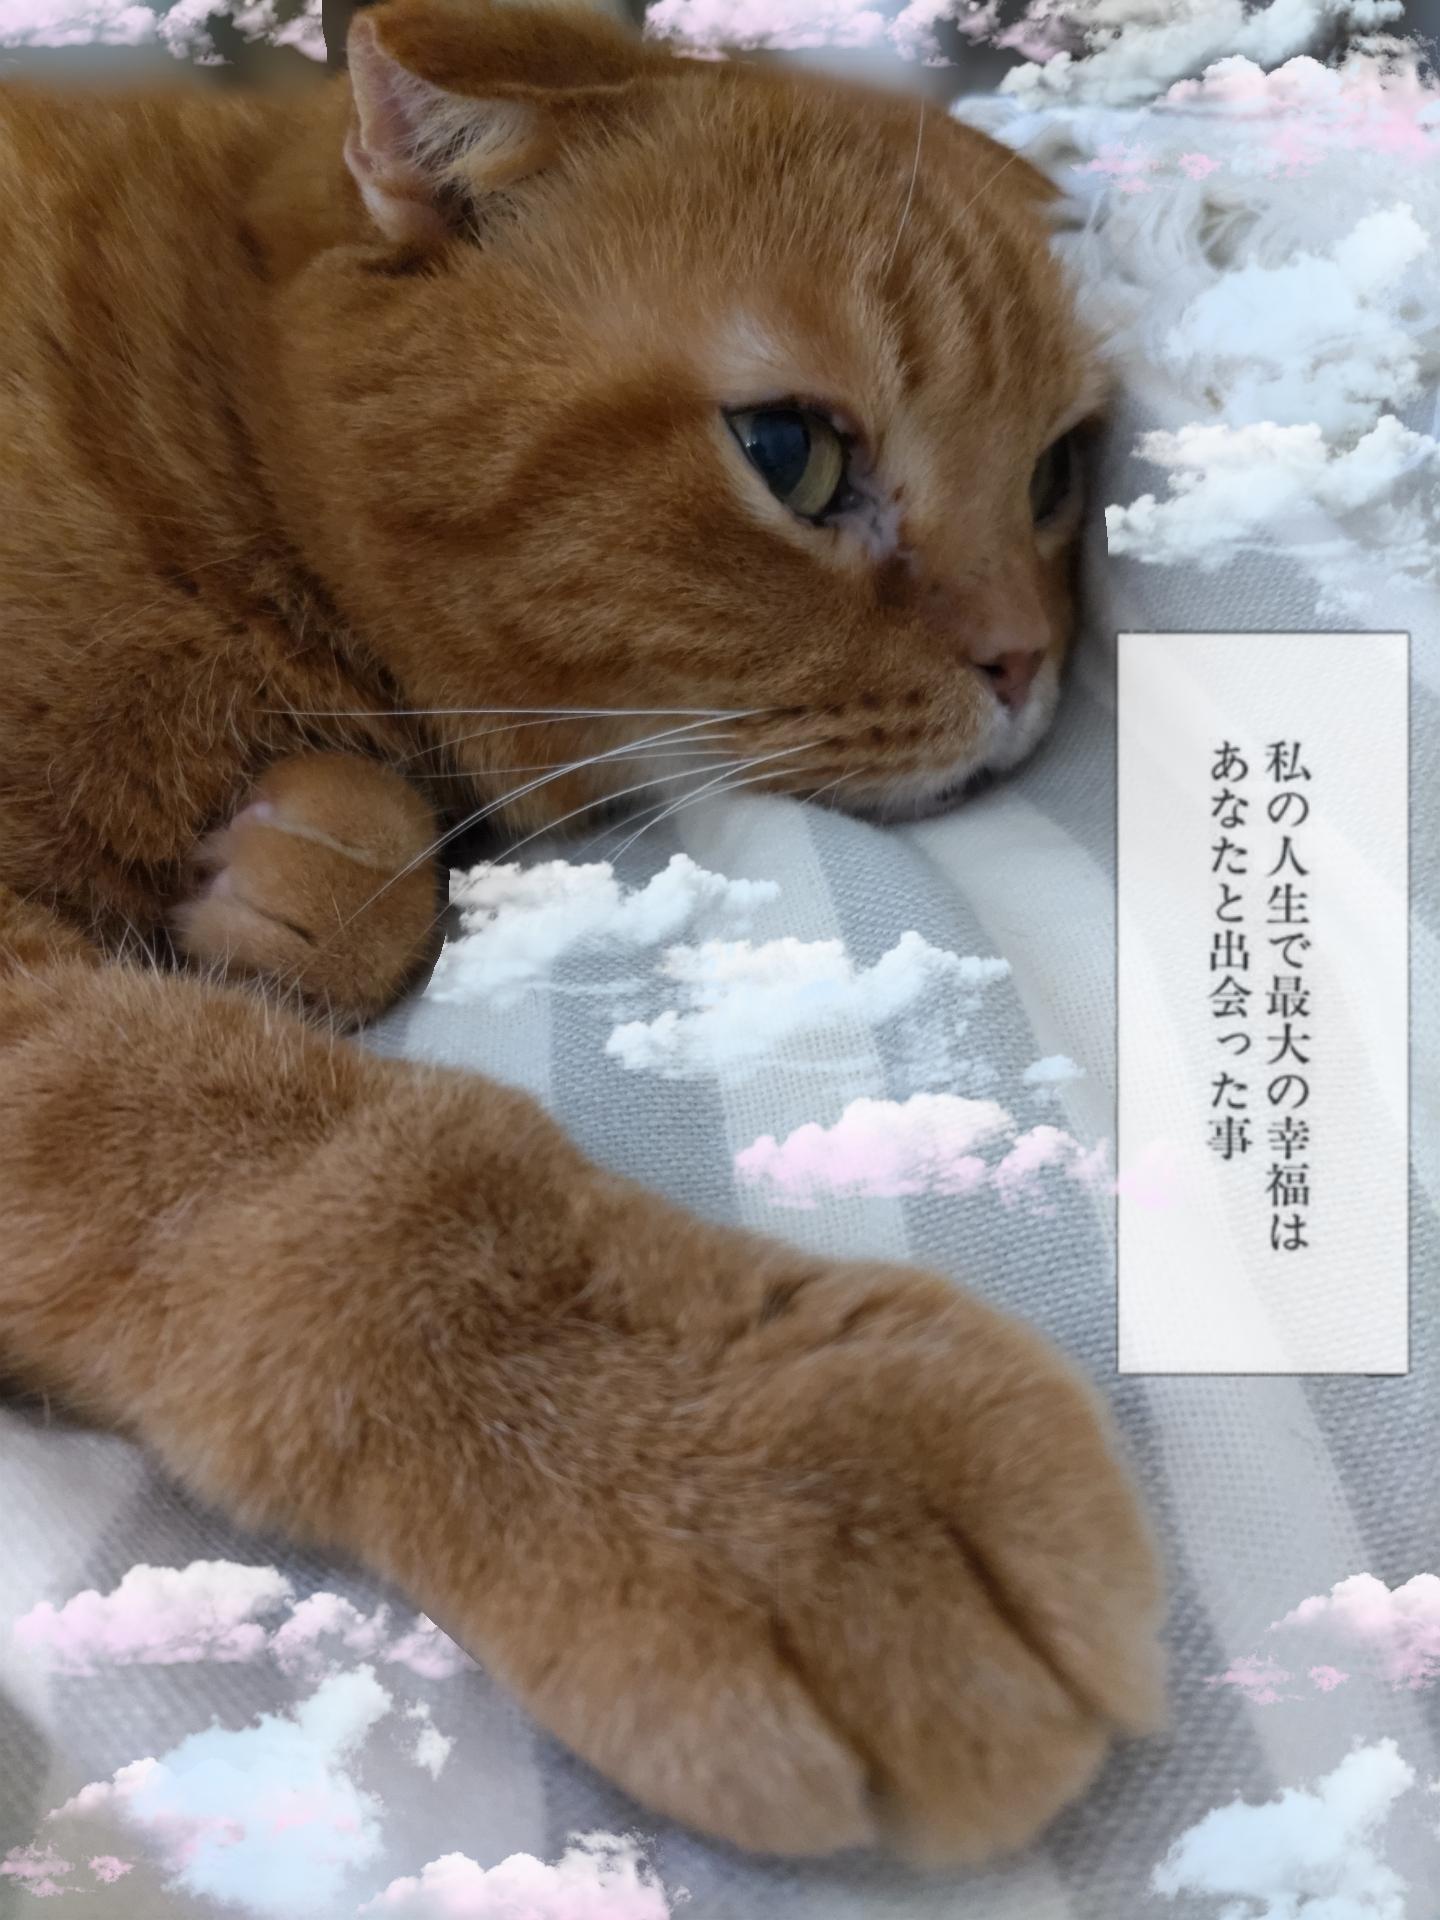 <img class="emojione" alt="😷" title=":mask:" src="https://fuzoku.jp/assets/img/emojione/1f637.png"/><img class="emojione" alt="🤧" title=":sneezing_face:" src="https://fuzoku.jp/assets/img/emojione/1f927.png"/><img class="emojione" alt="😷" title=":mask:" src="https://fuzoku.jp/assets/img/emojione/1f637.png"/><img class="emojione" alt="🤧" title=":sneezing_face:" src="https://fuzoku.jp/assets/img/emojione/1f927.png"/>